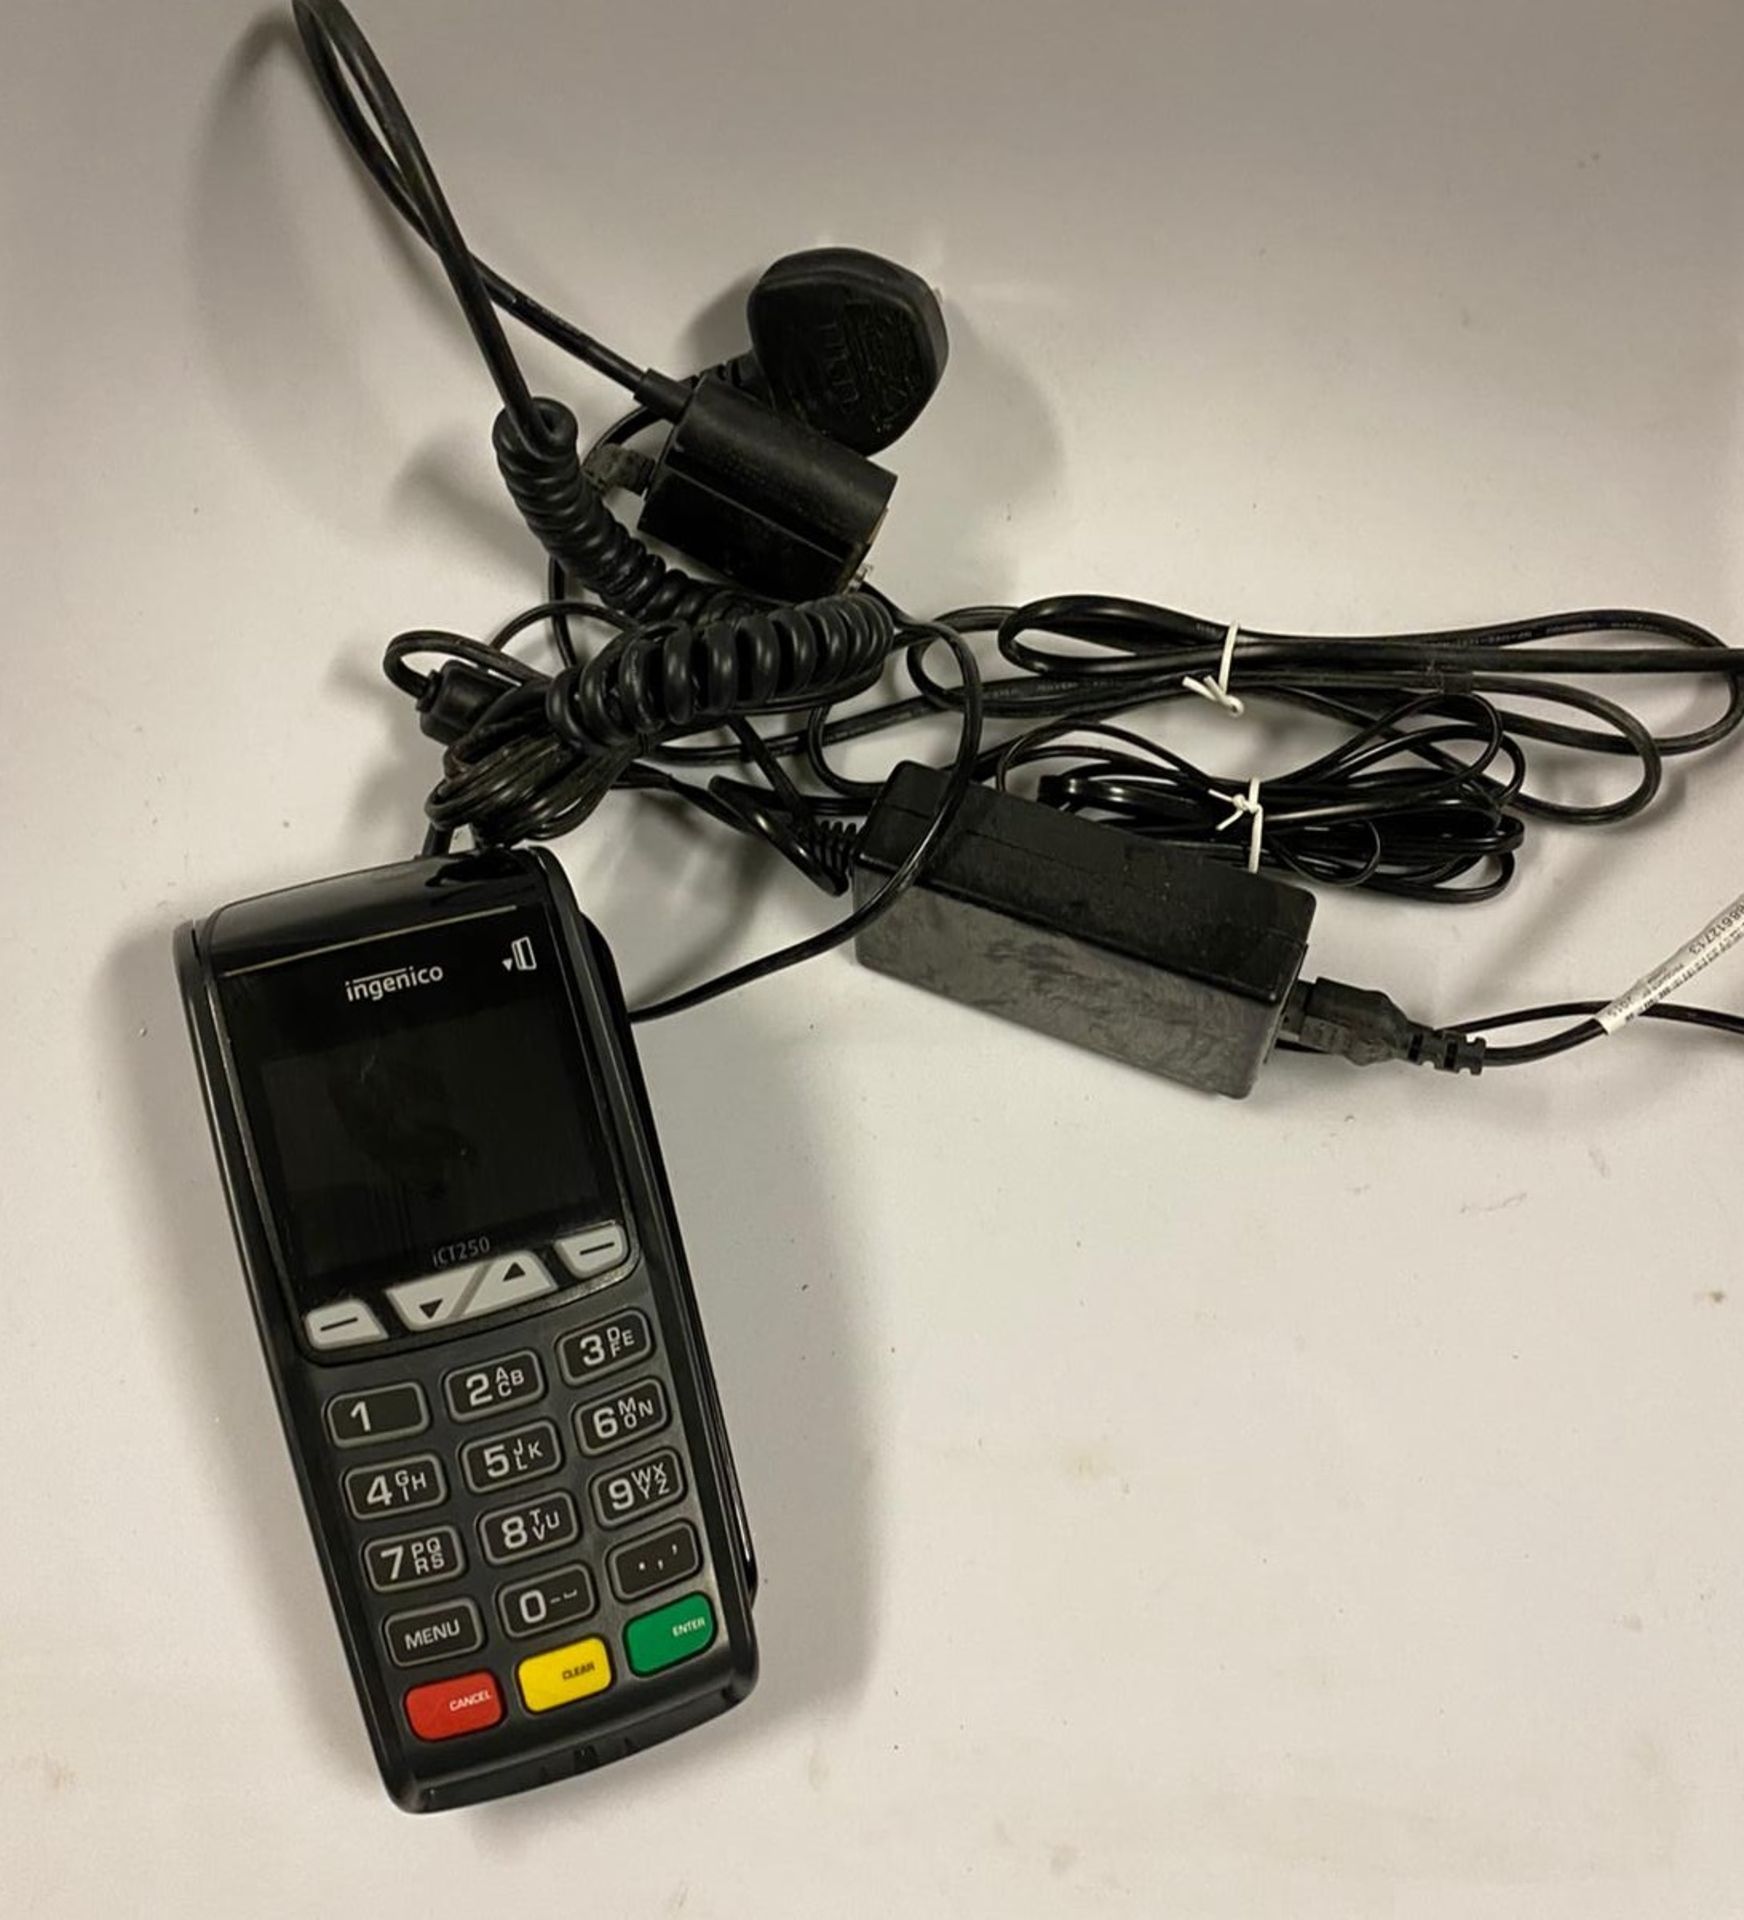 1 x Ingenico ICT250 Credit Card Terminal - Used Condition - location: Altrincham WA14 - Image 4 of 6